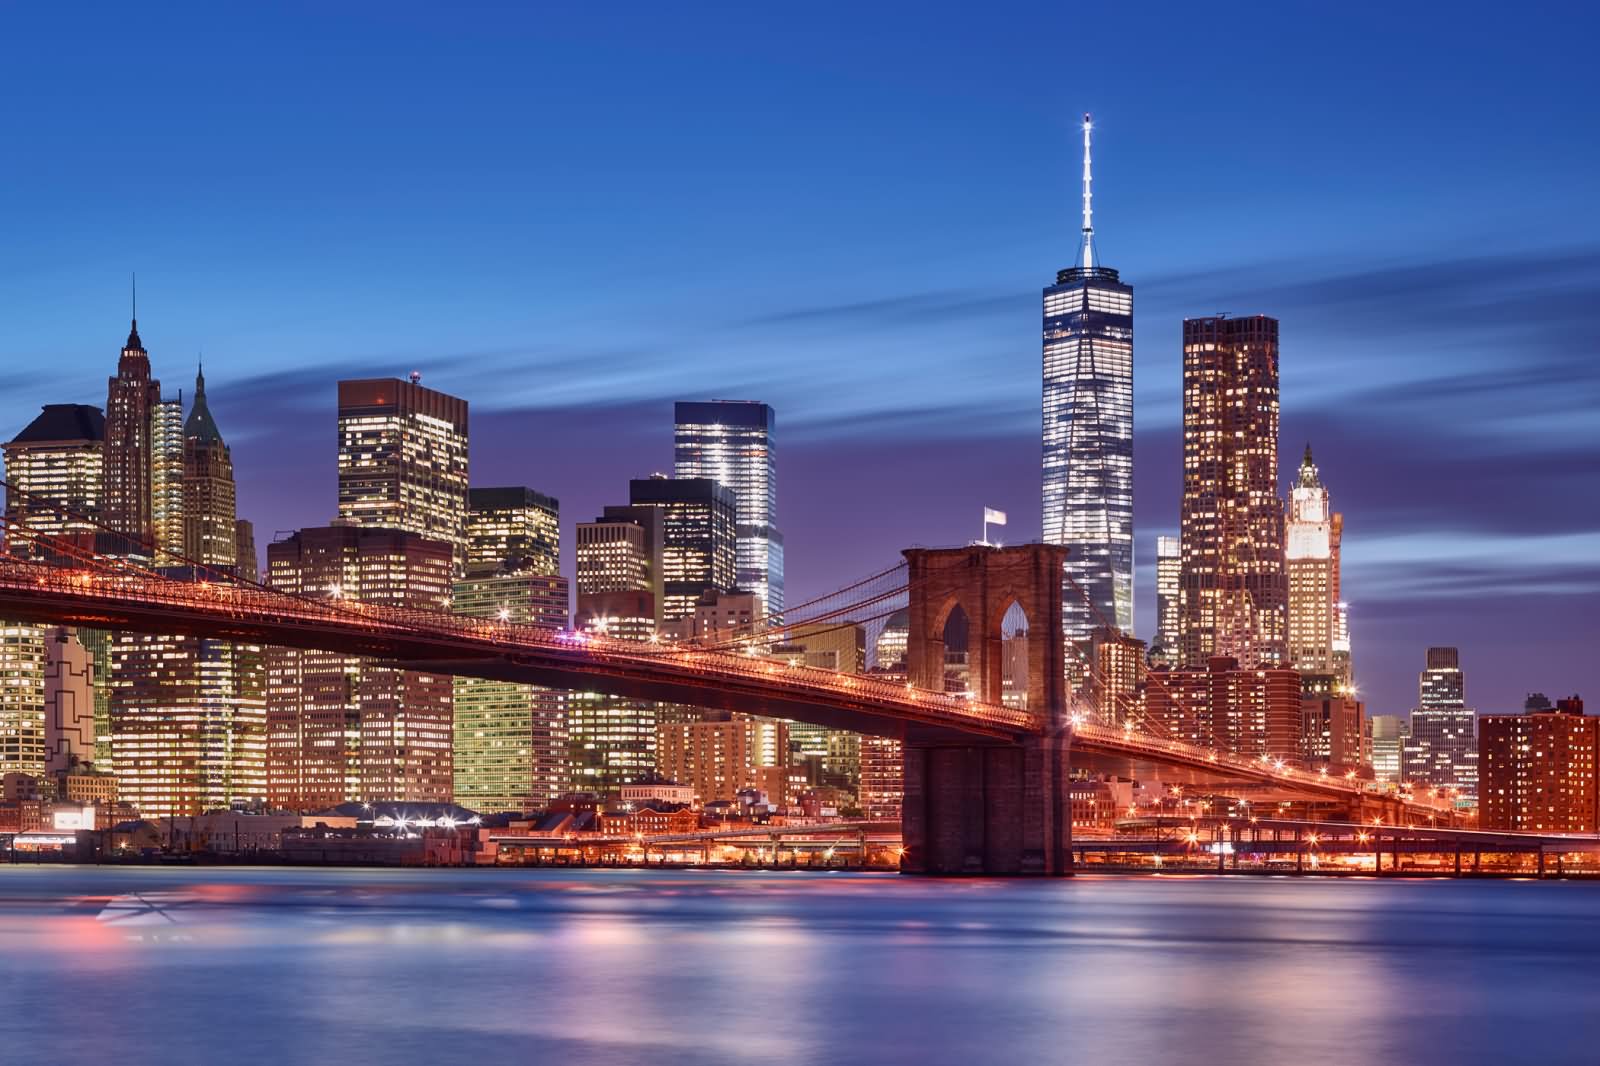 Brooklyn Bridge And One World Trade Center Night View